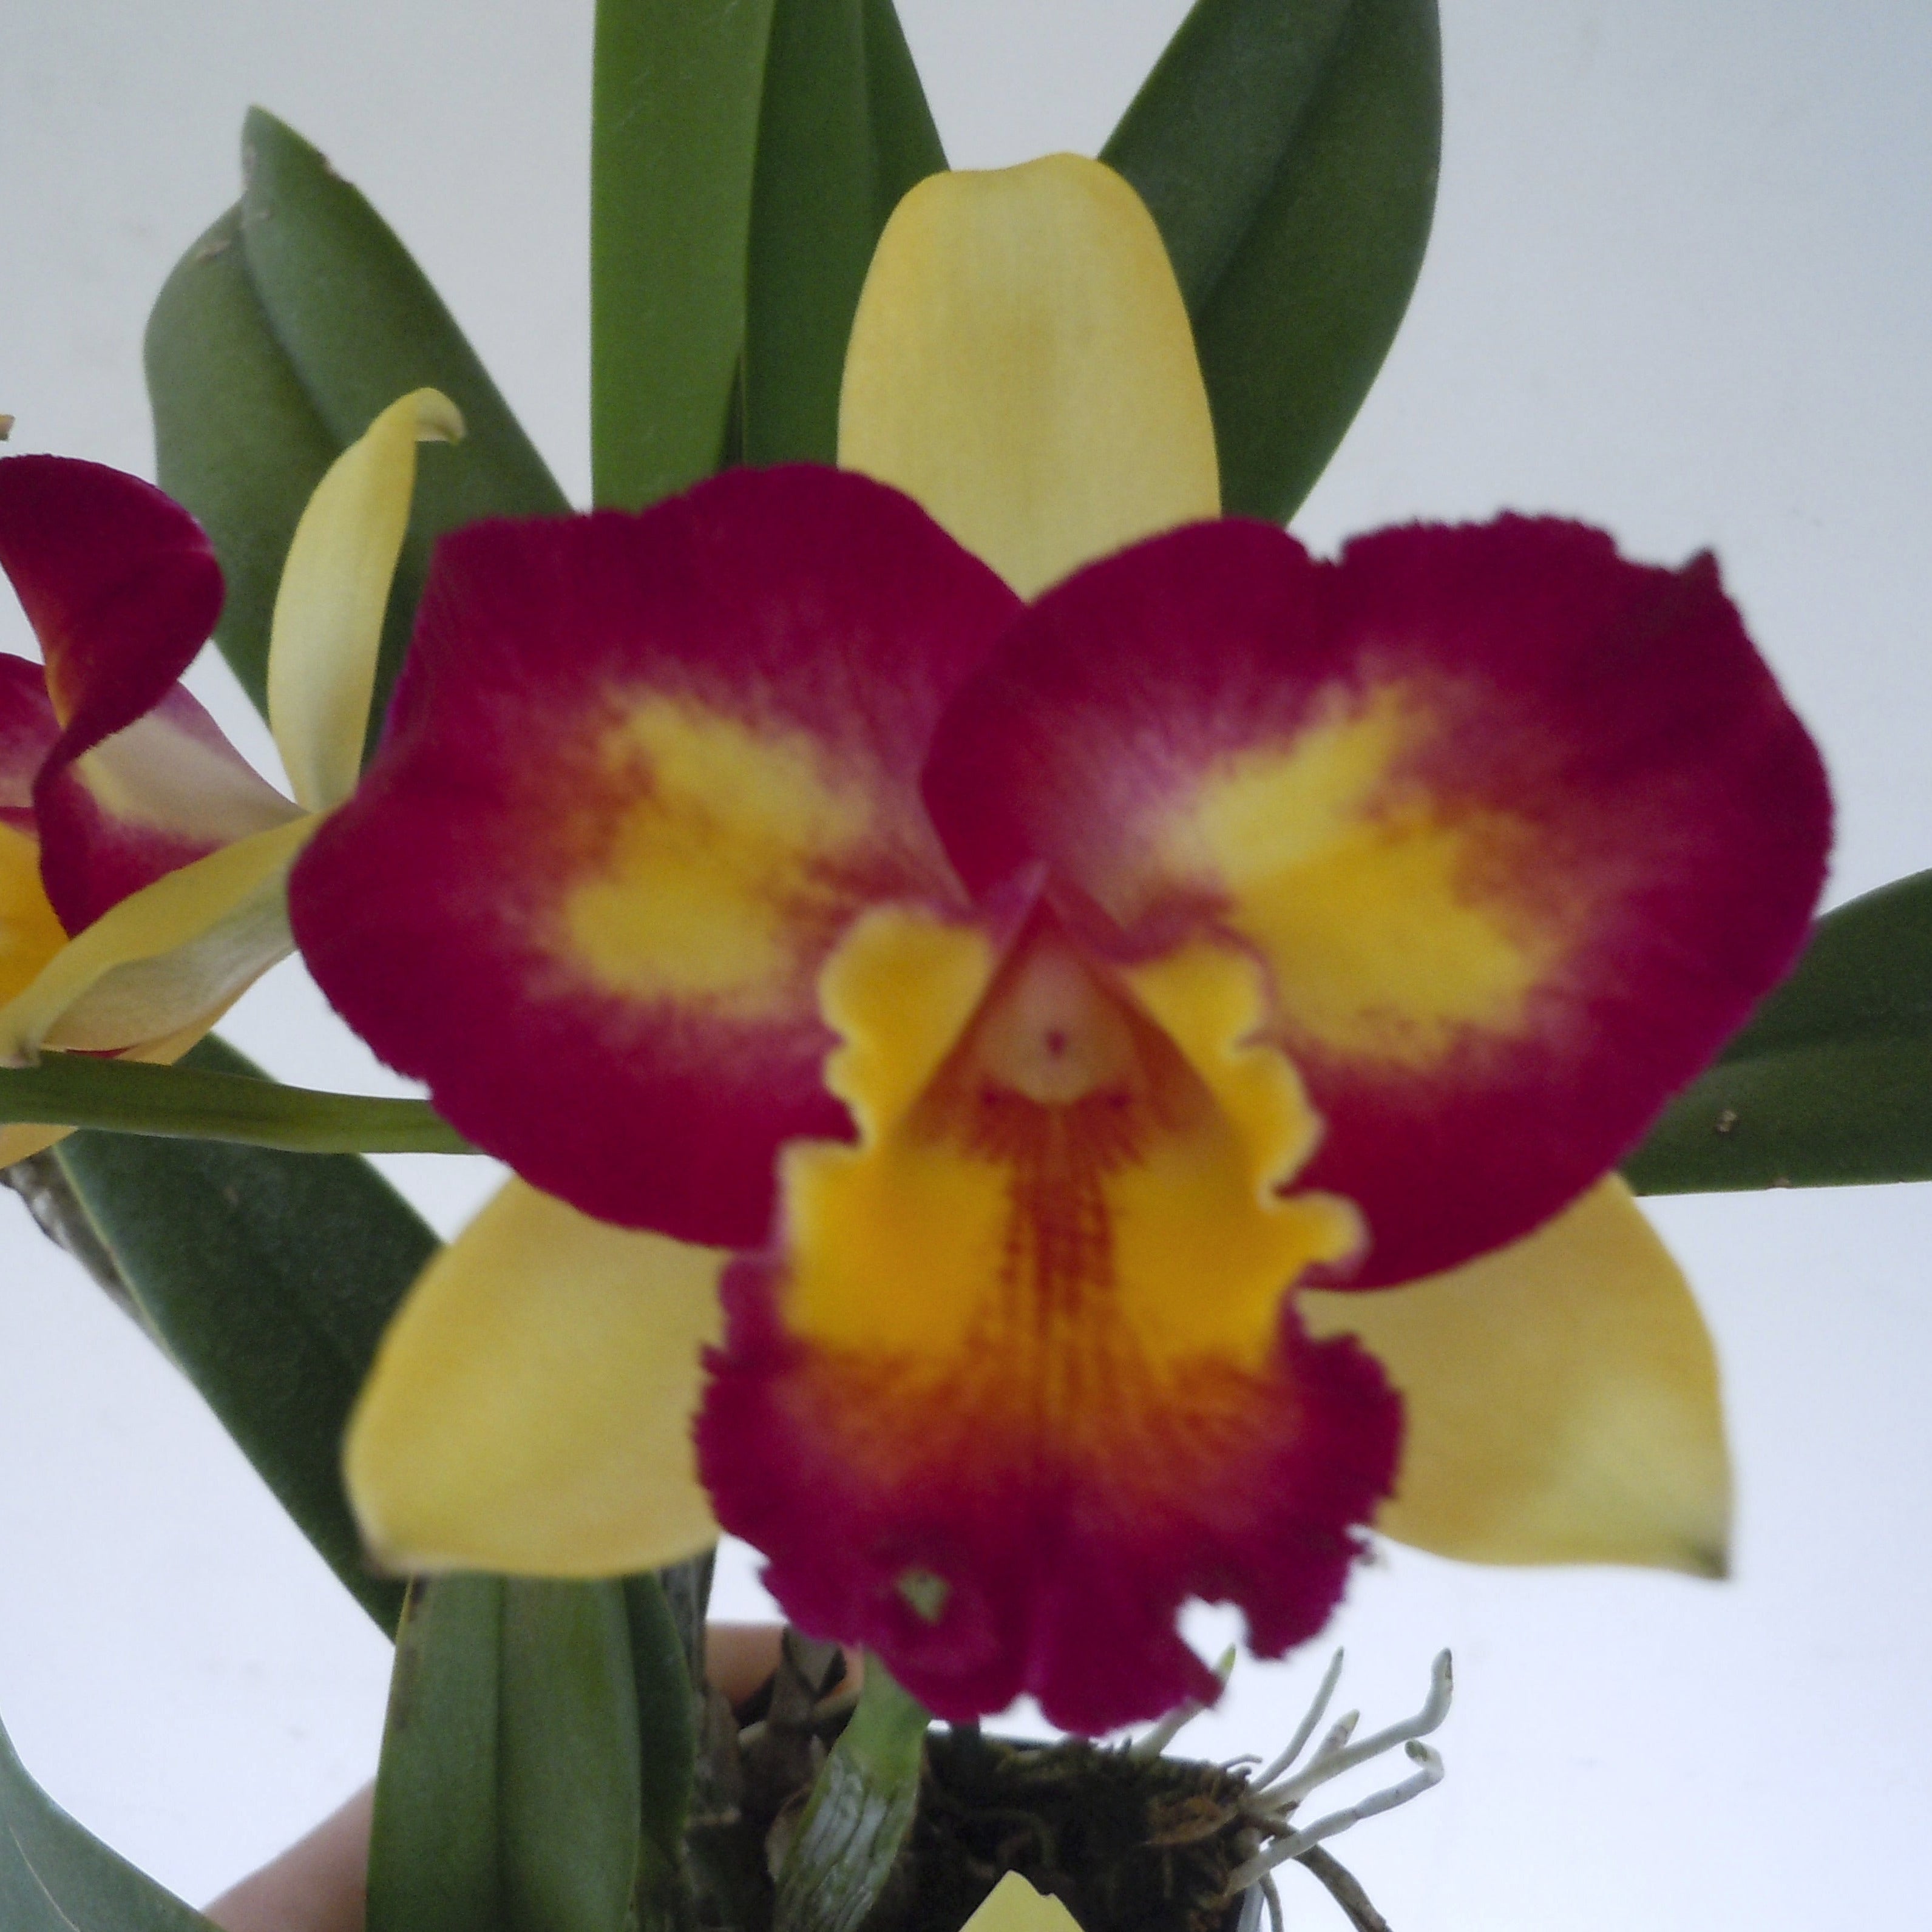 Cattleya Orchid